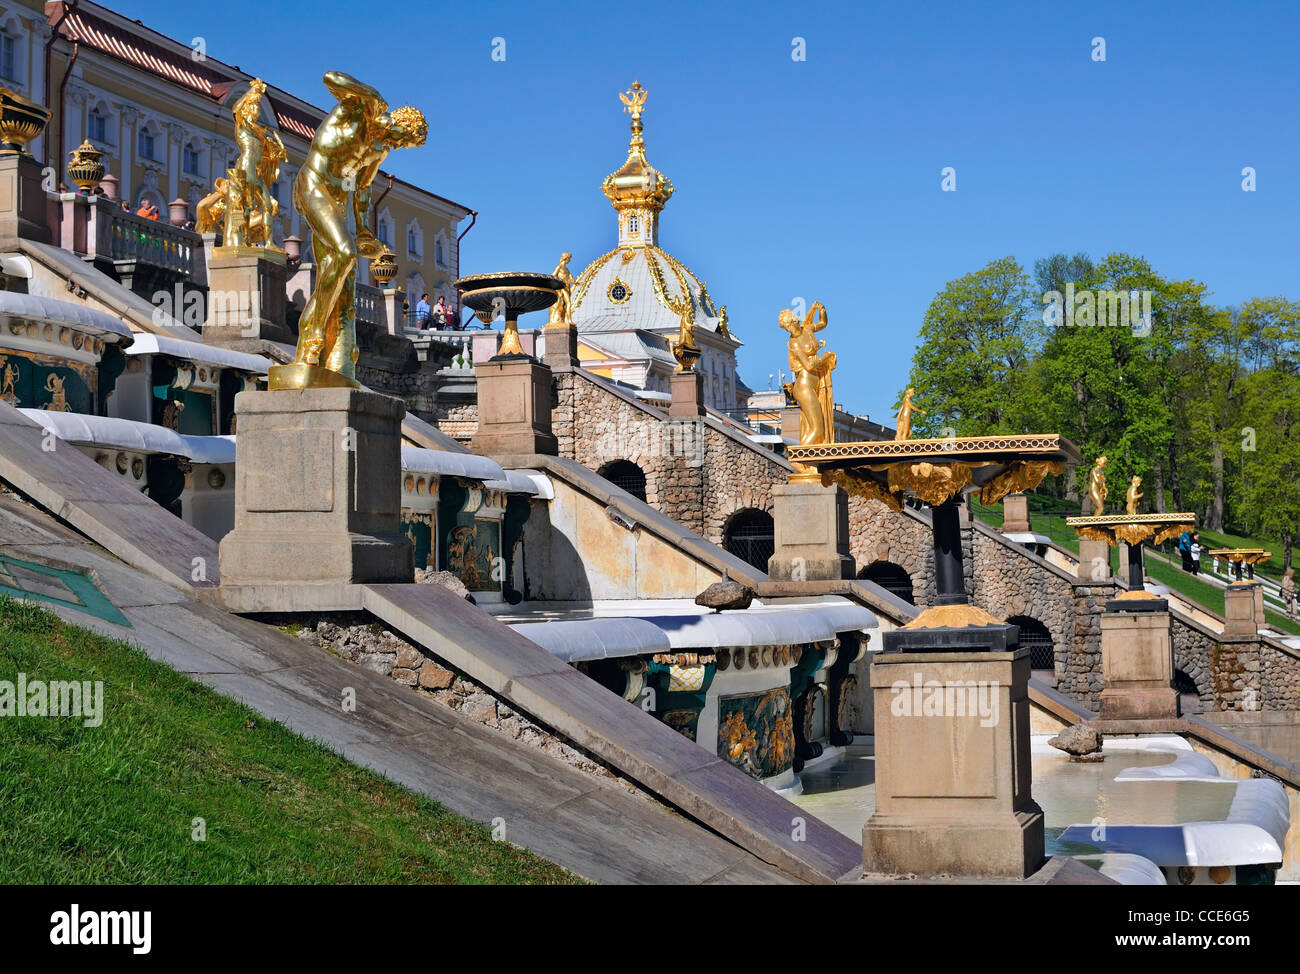 Saint-Petersburg: Fountains of Petergof Stock Photo